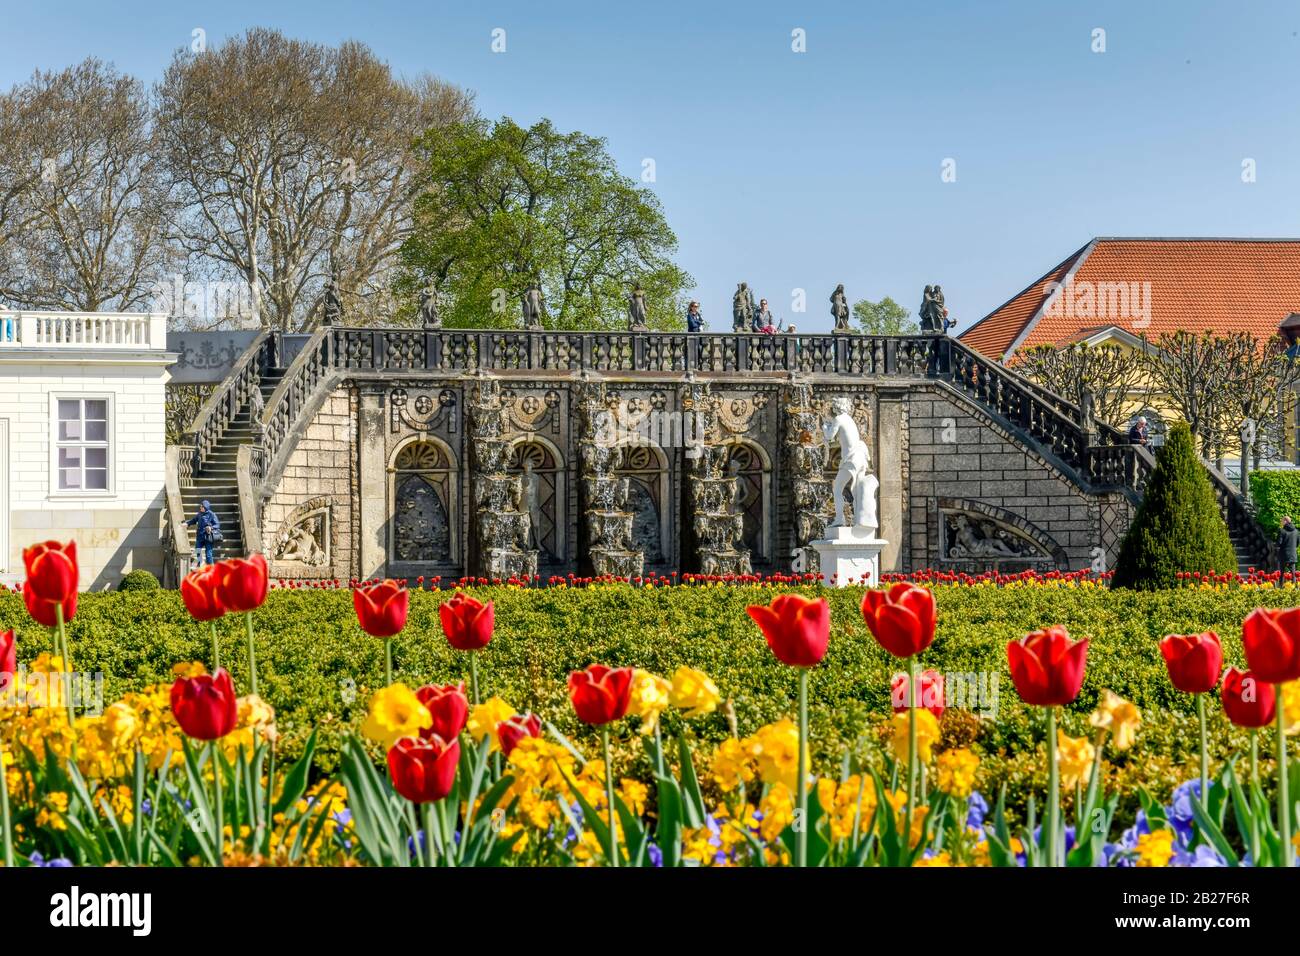 Große Kaskade, Großer Garten, Herrenhäuser Gärten, Hannover, Niedersachsen, Deutschland Stock Photo